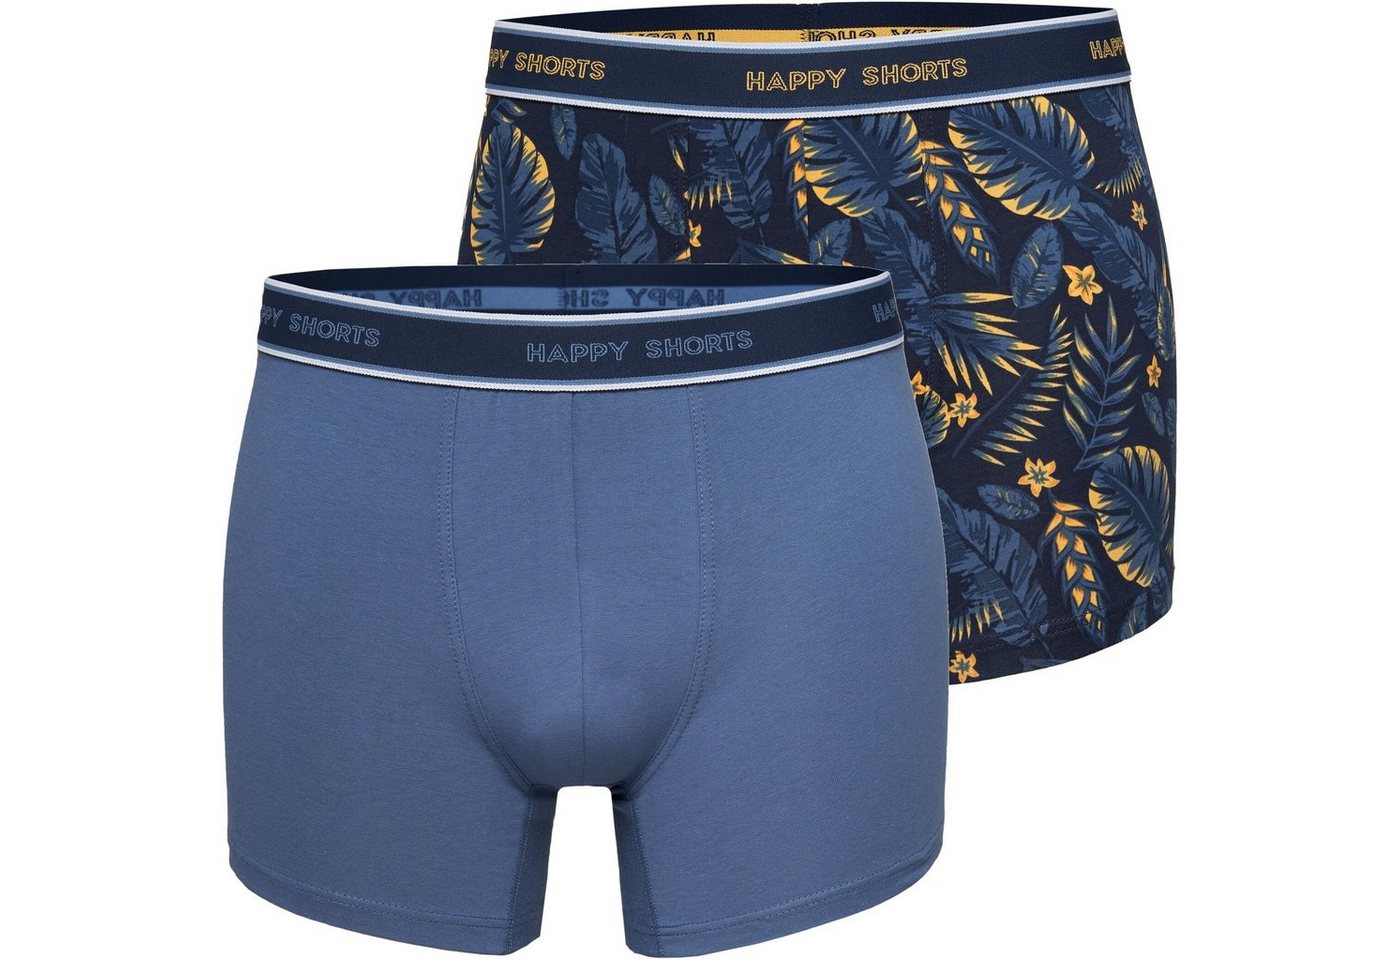 HAPPY SHORTS Trunk 2 Happy Shorts Pants Jersey Trunk Herren Boxershorts Hawaii - Hawaii (1-St) von HAPPY SHORTS